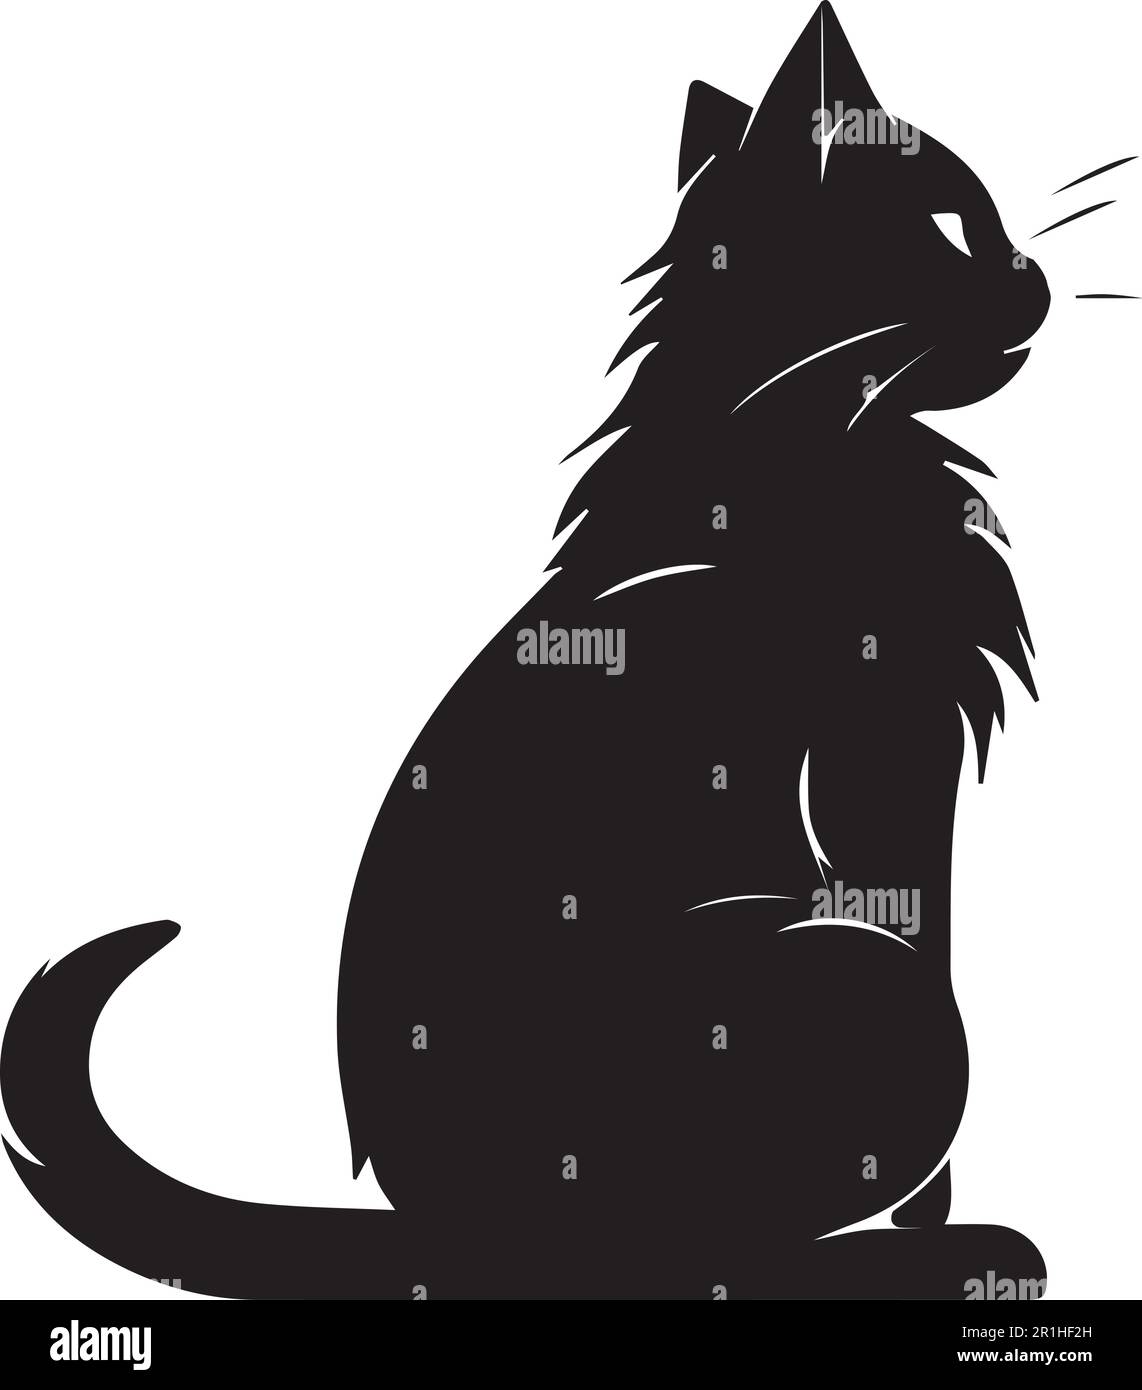 A black silhouette cat vector illustration. Stock Vector